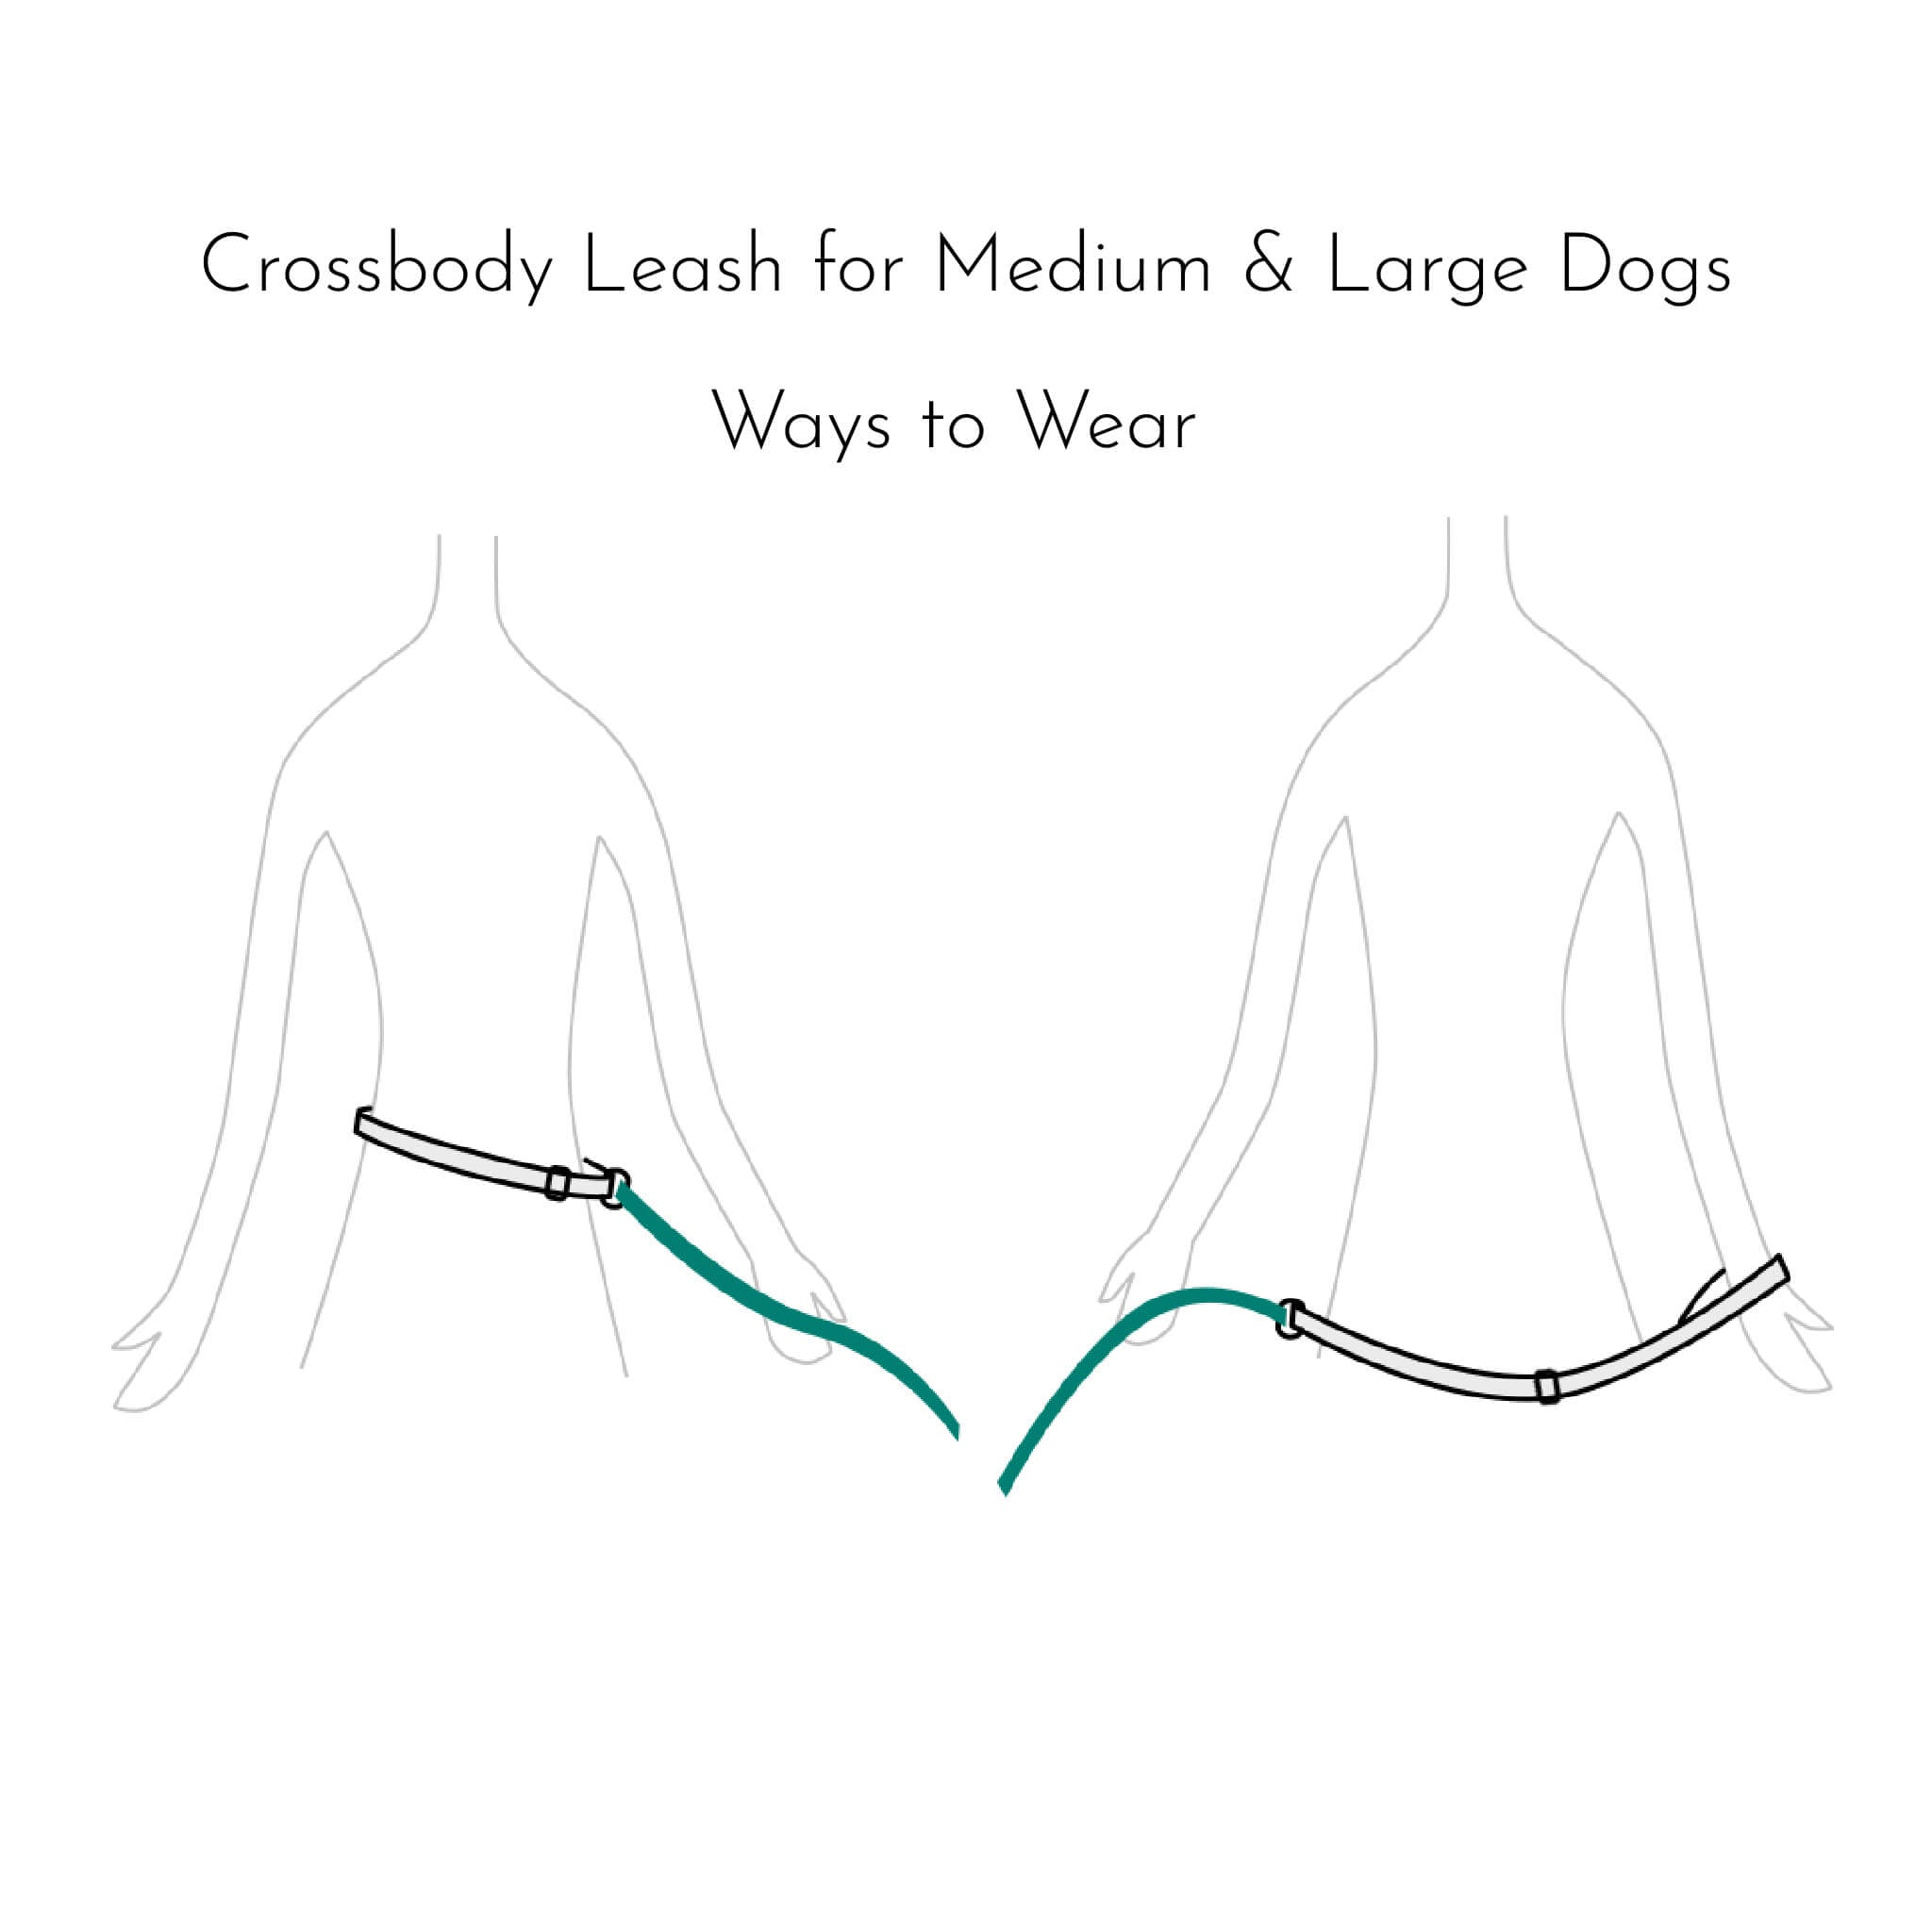 ways to wear crossbody leash for medium & large dogs